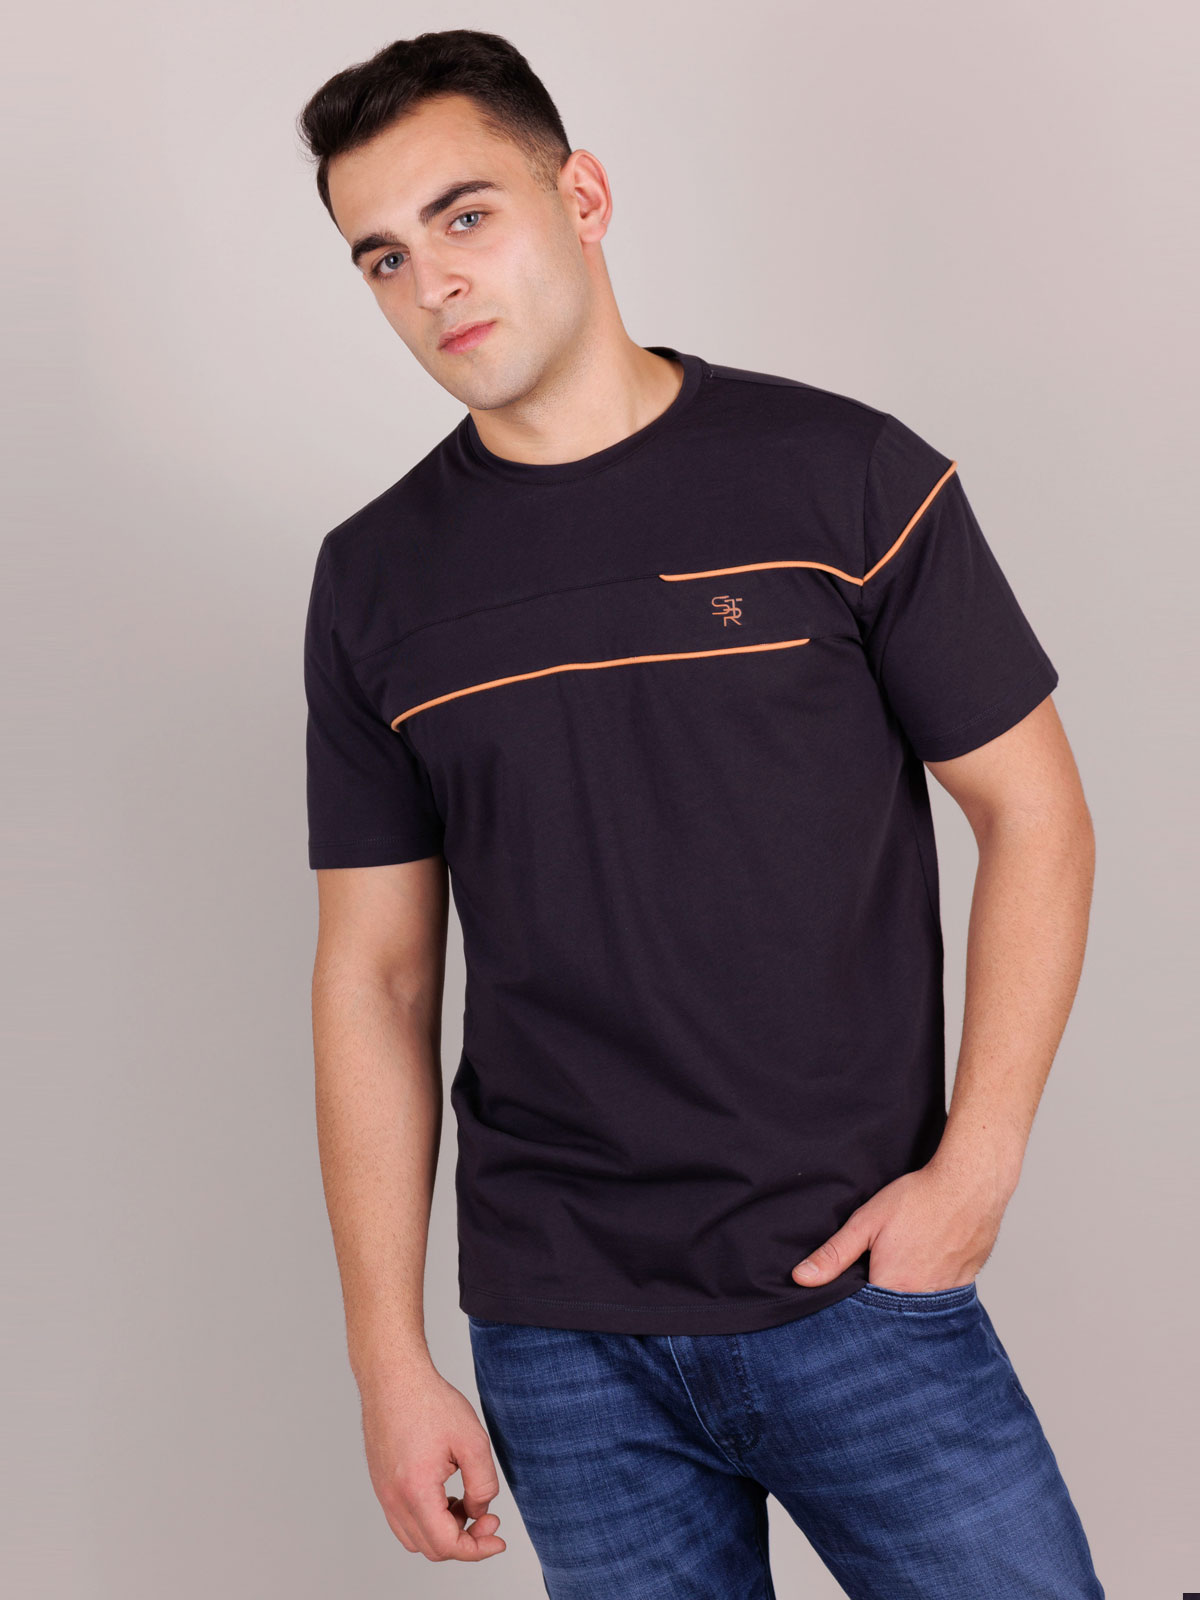 Tshirt with orange accent - 96453 € 27.00 img4